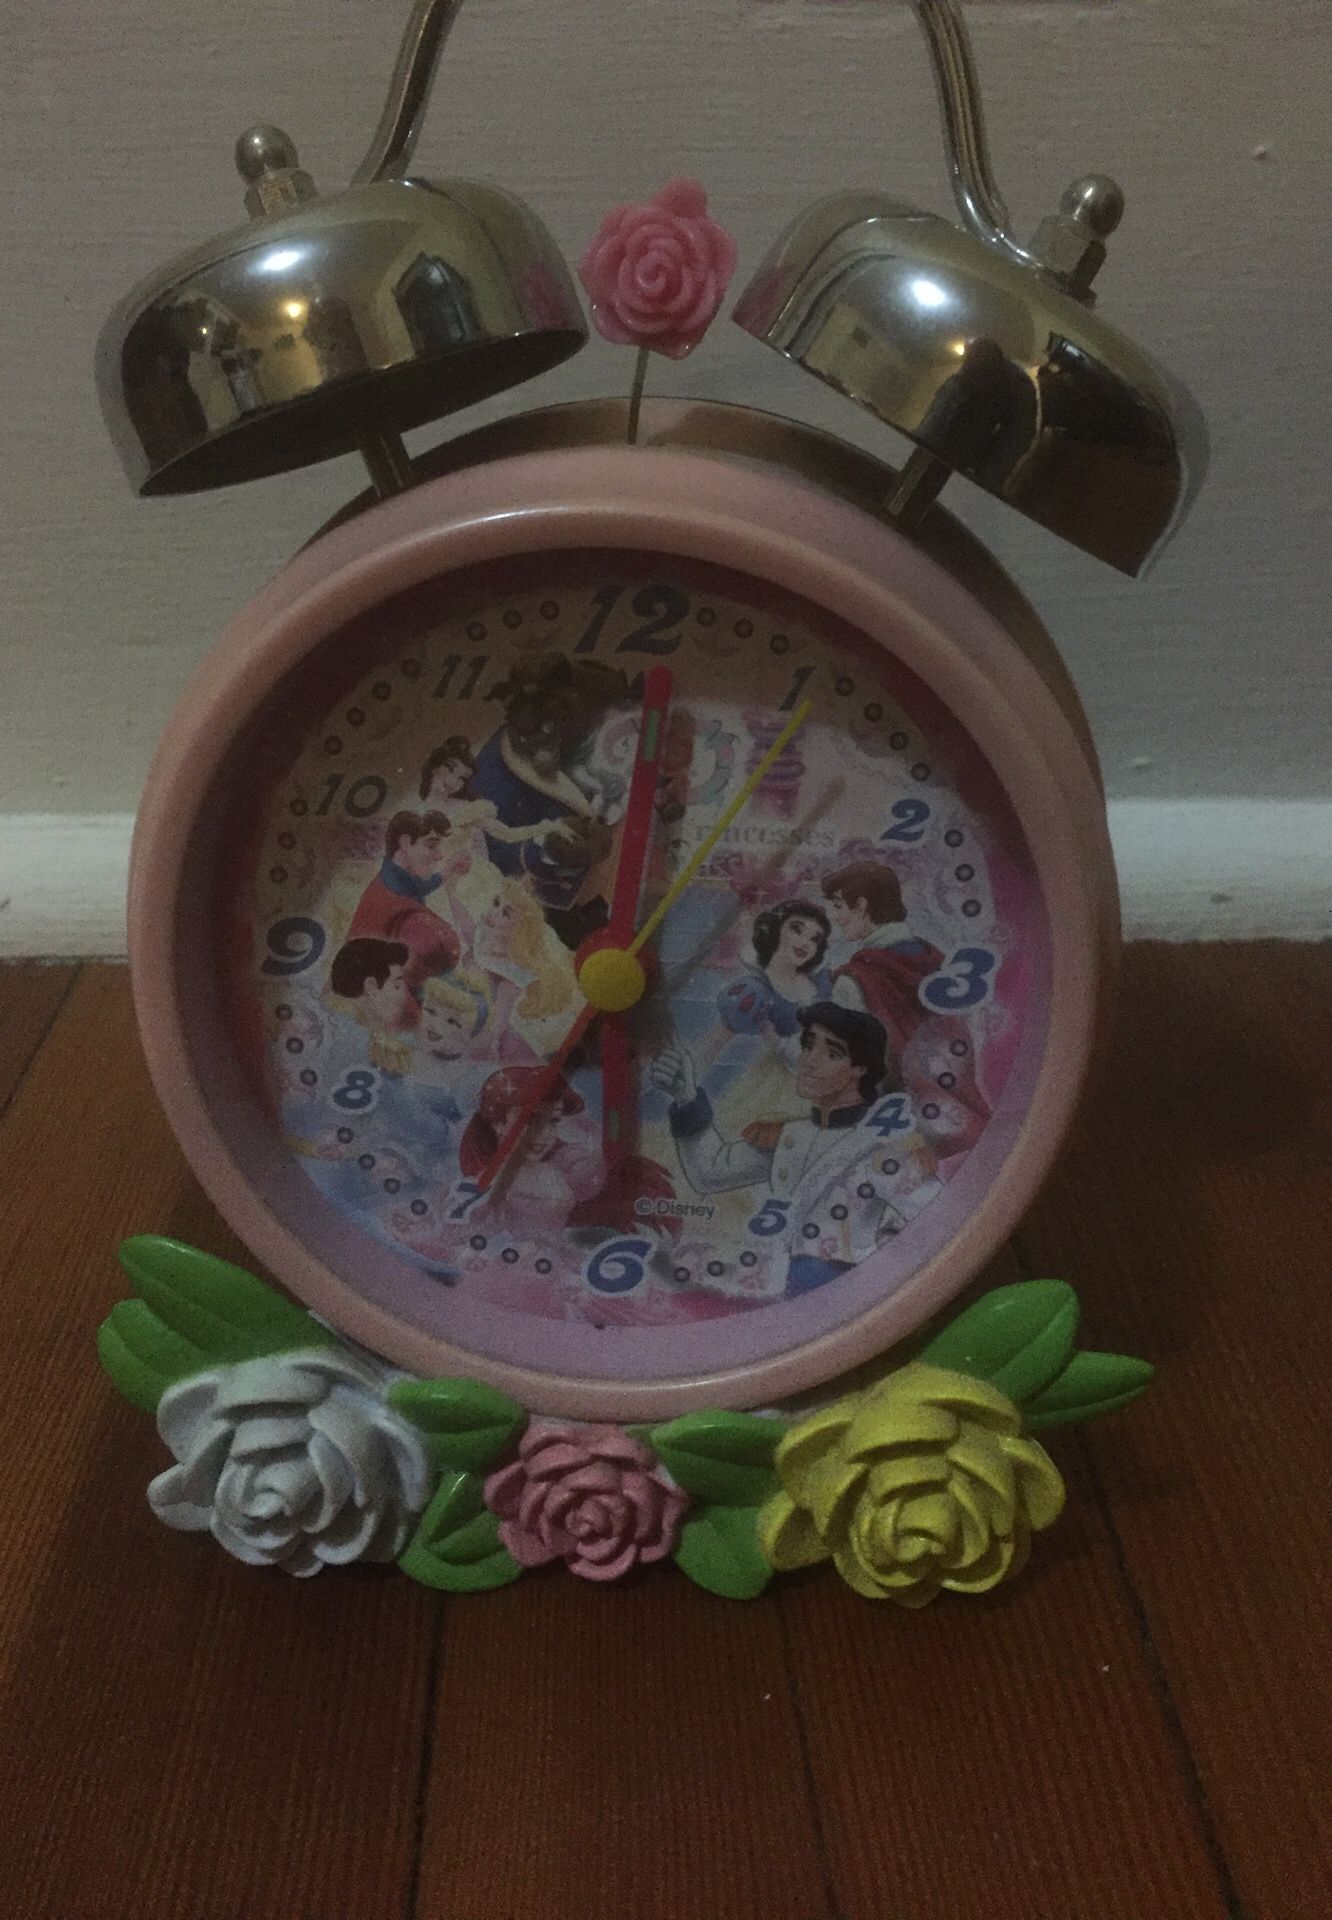 Disney Princess Clock with alarm